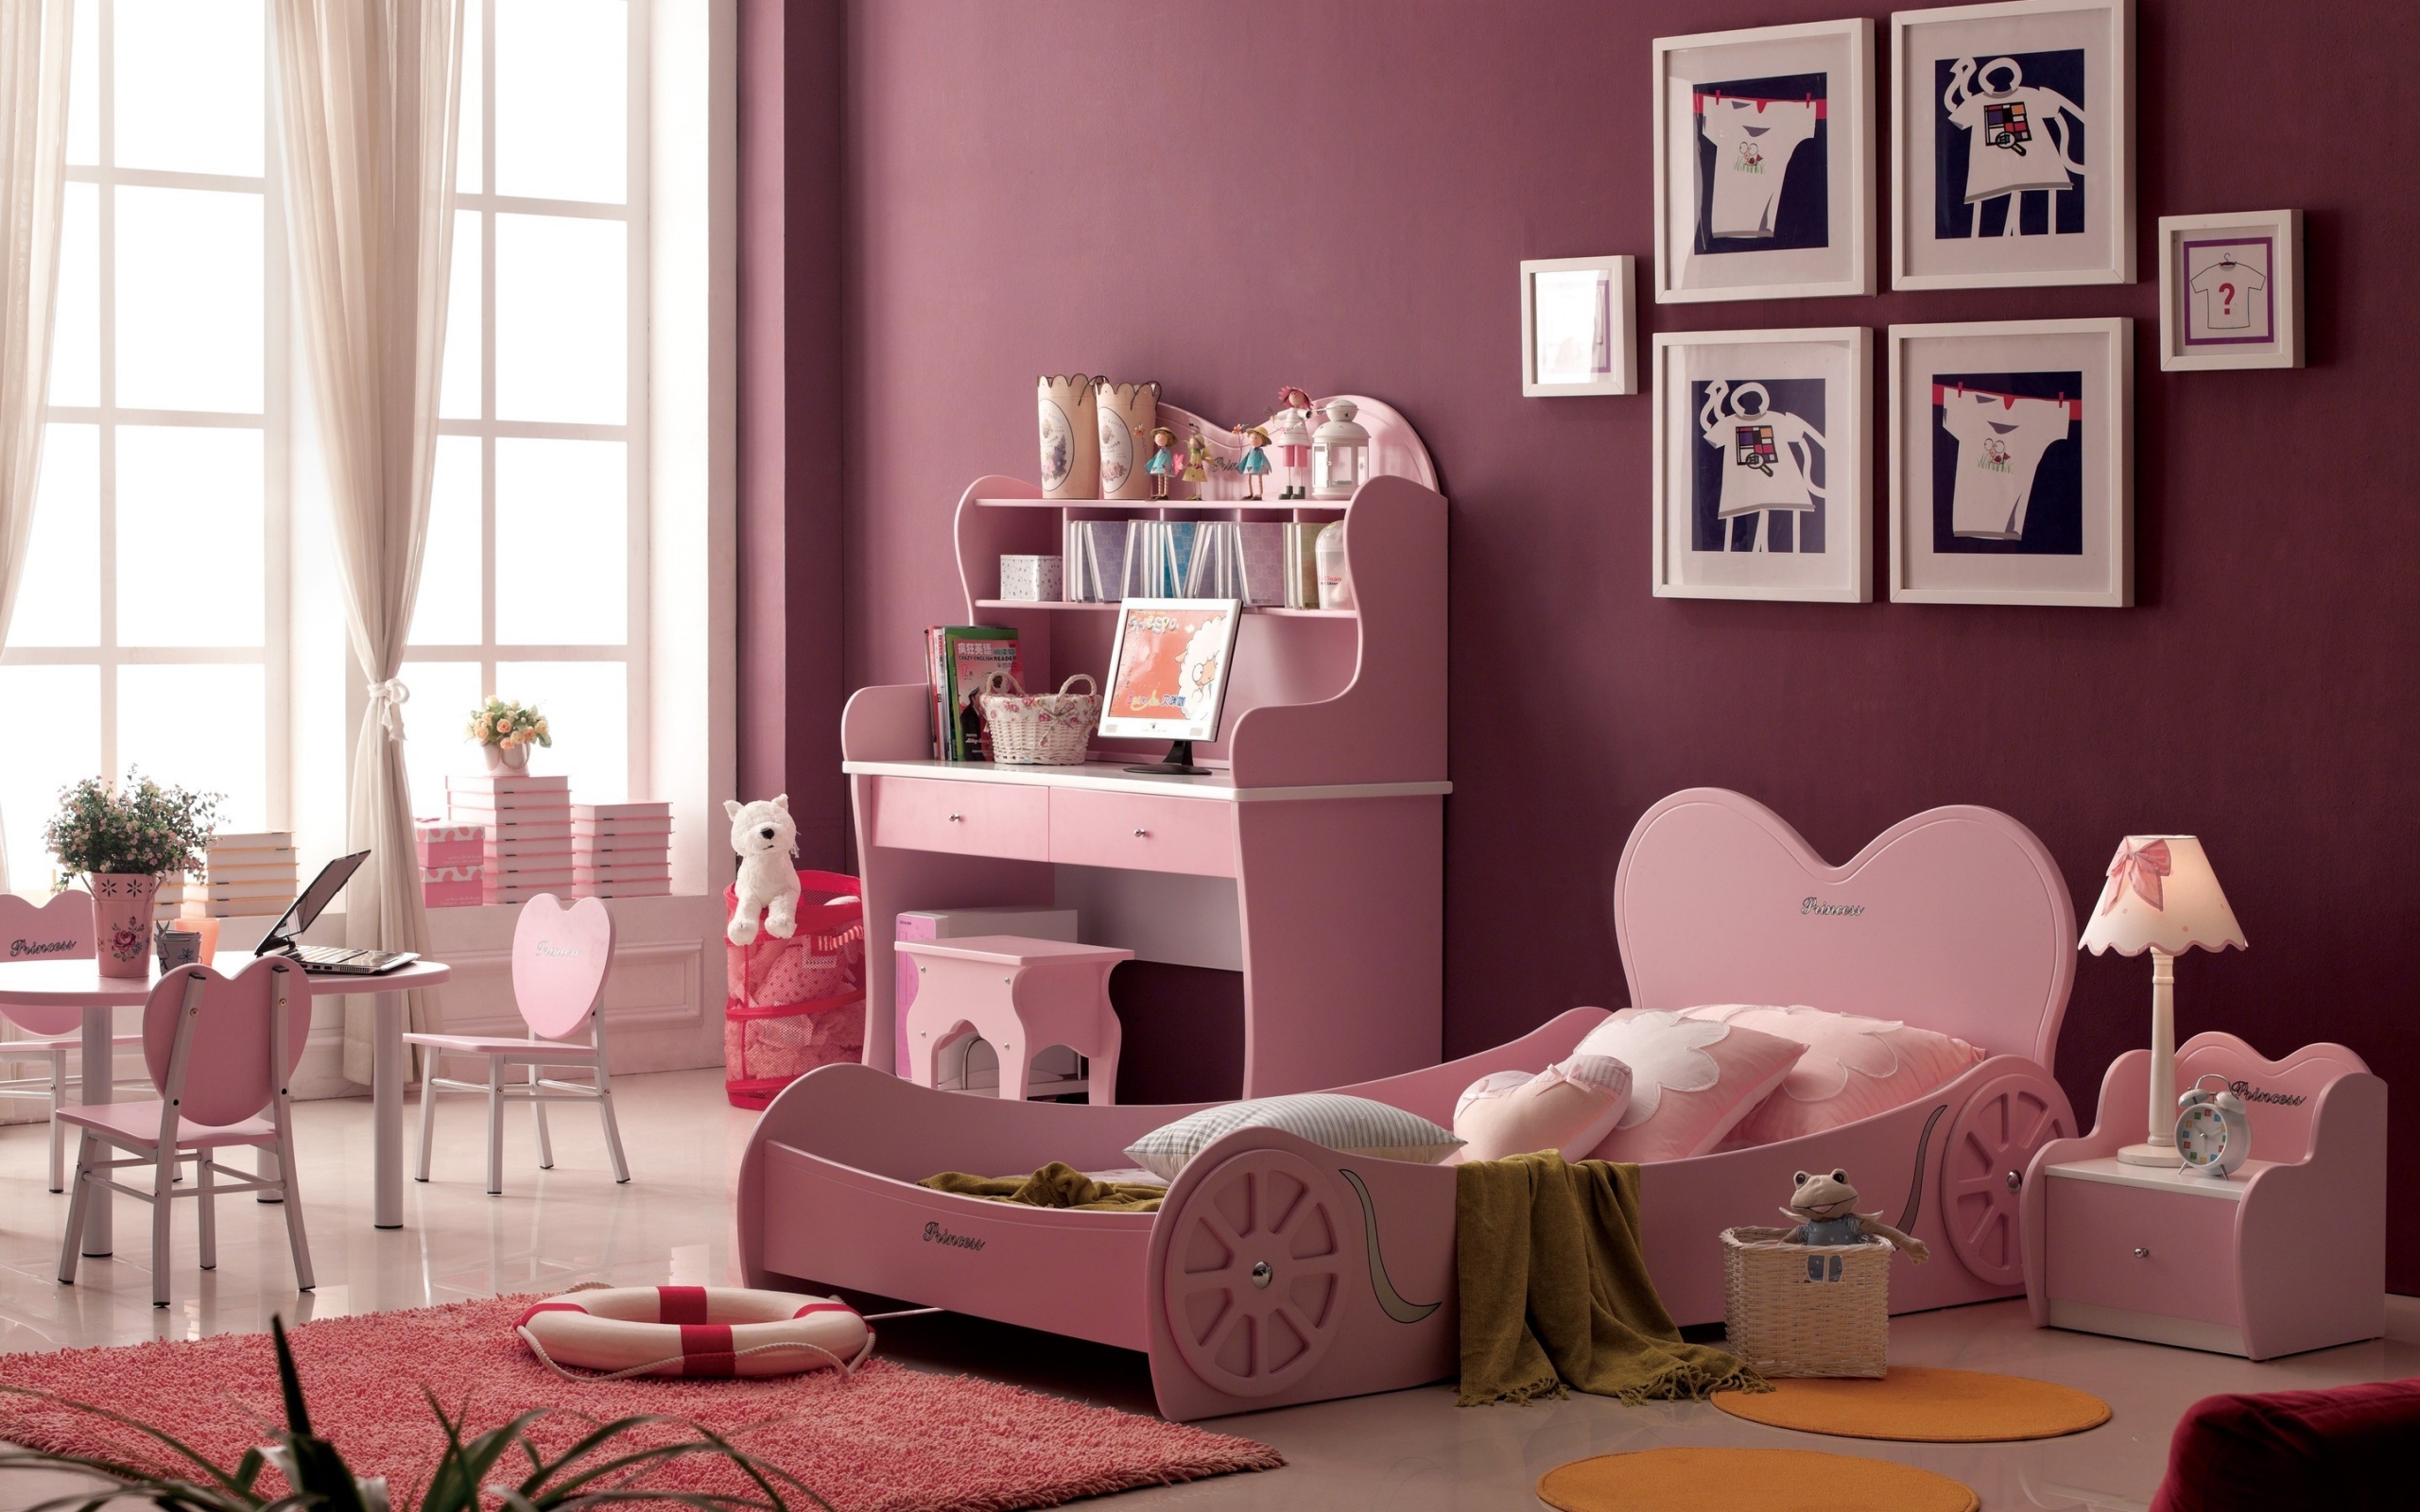 Princess Furniture for 2560 x 1600 widescreen resolution